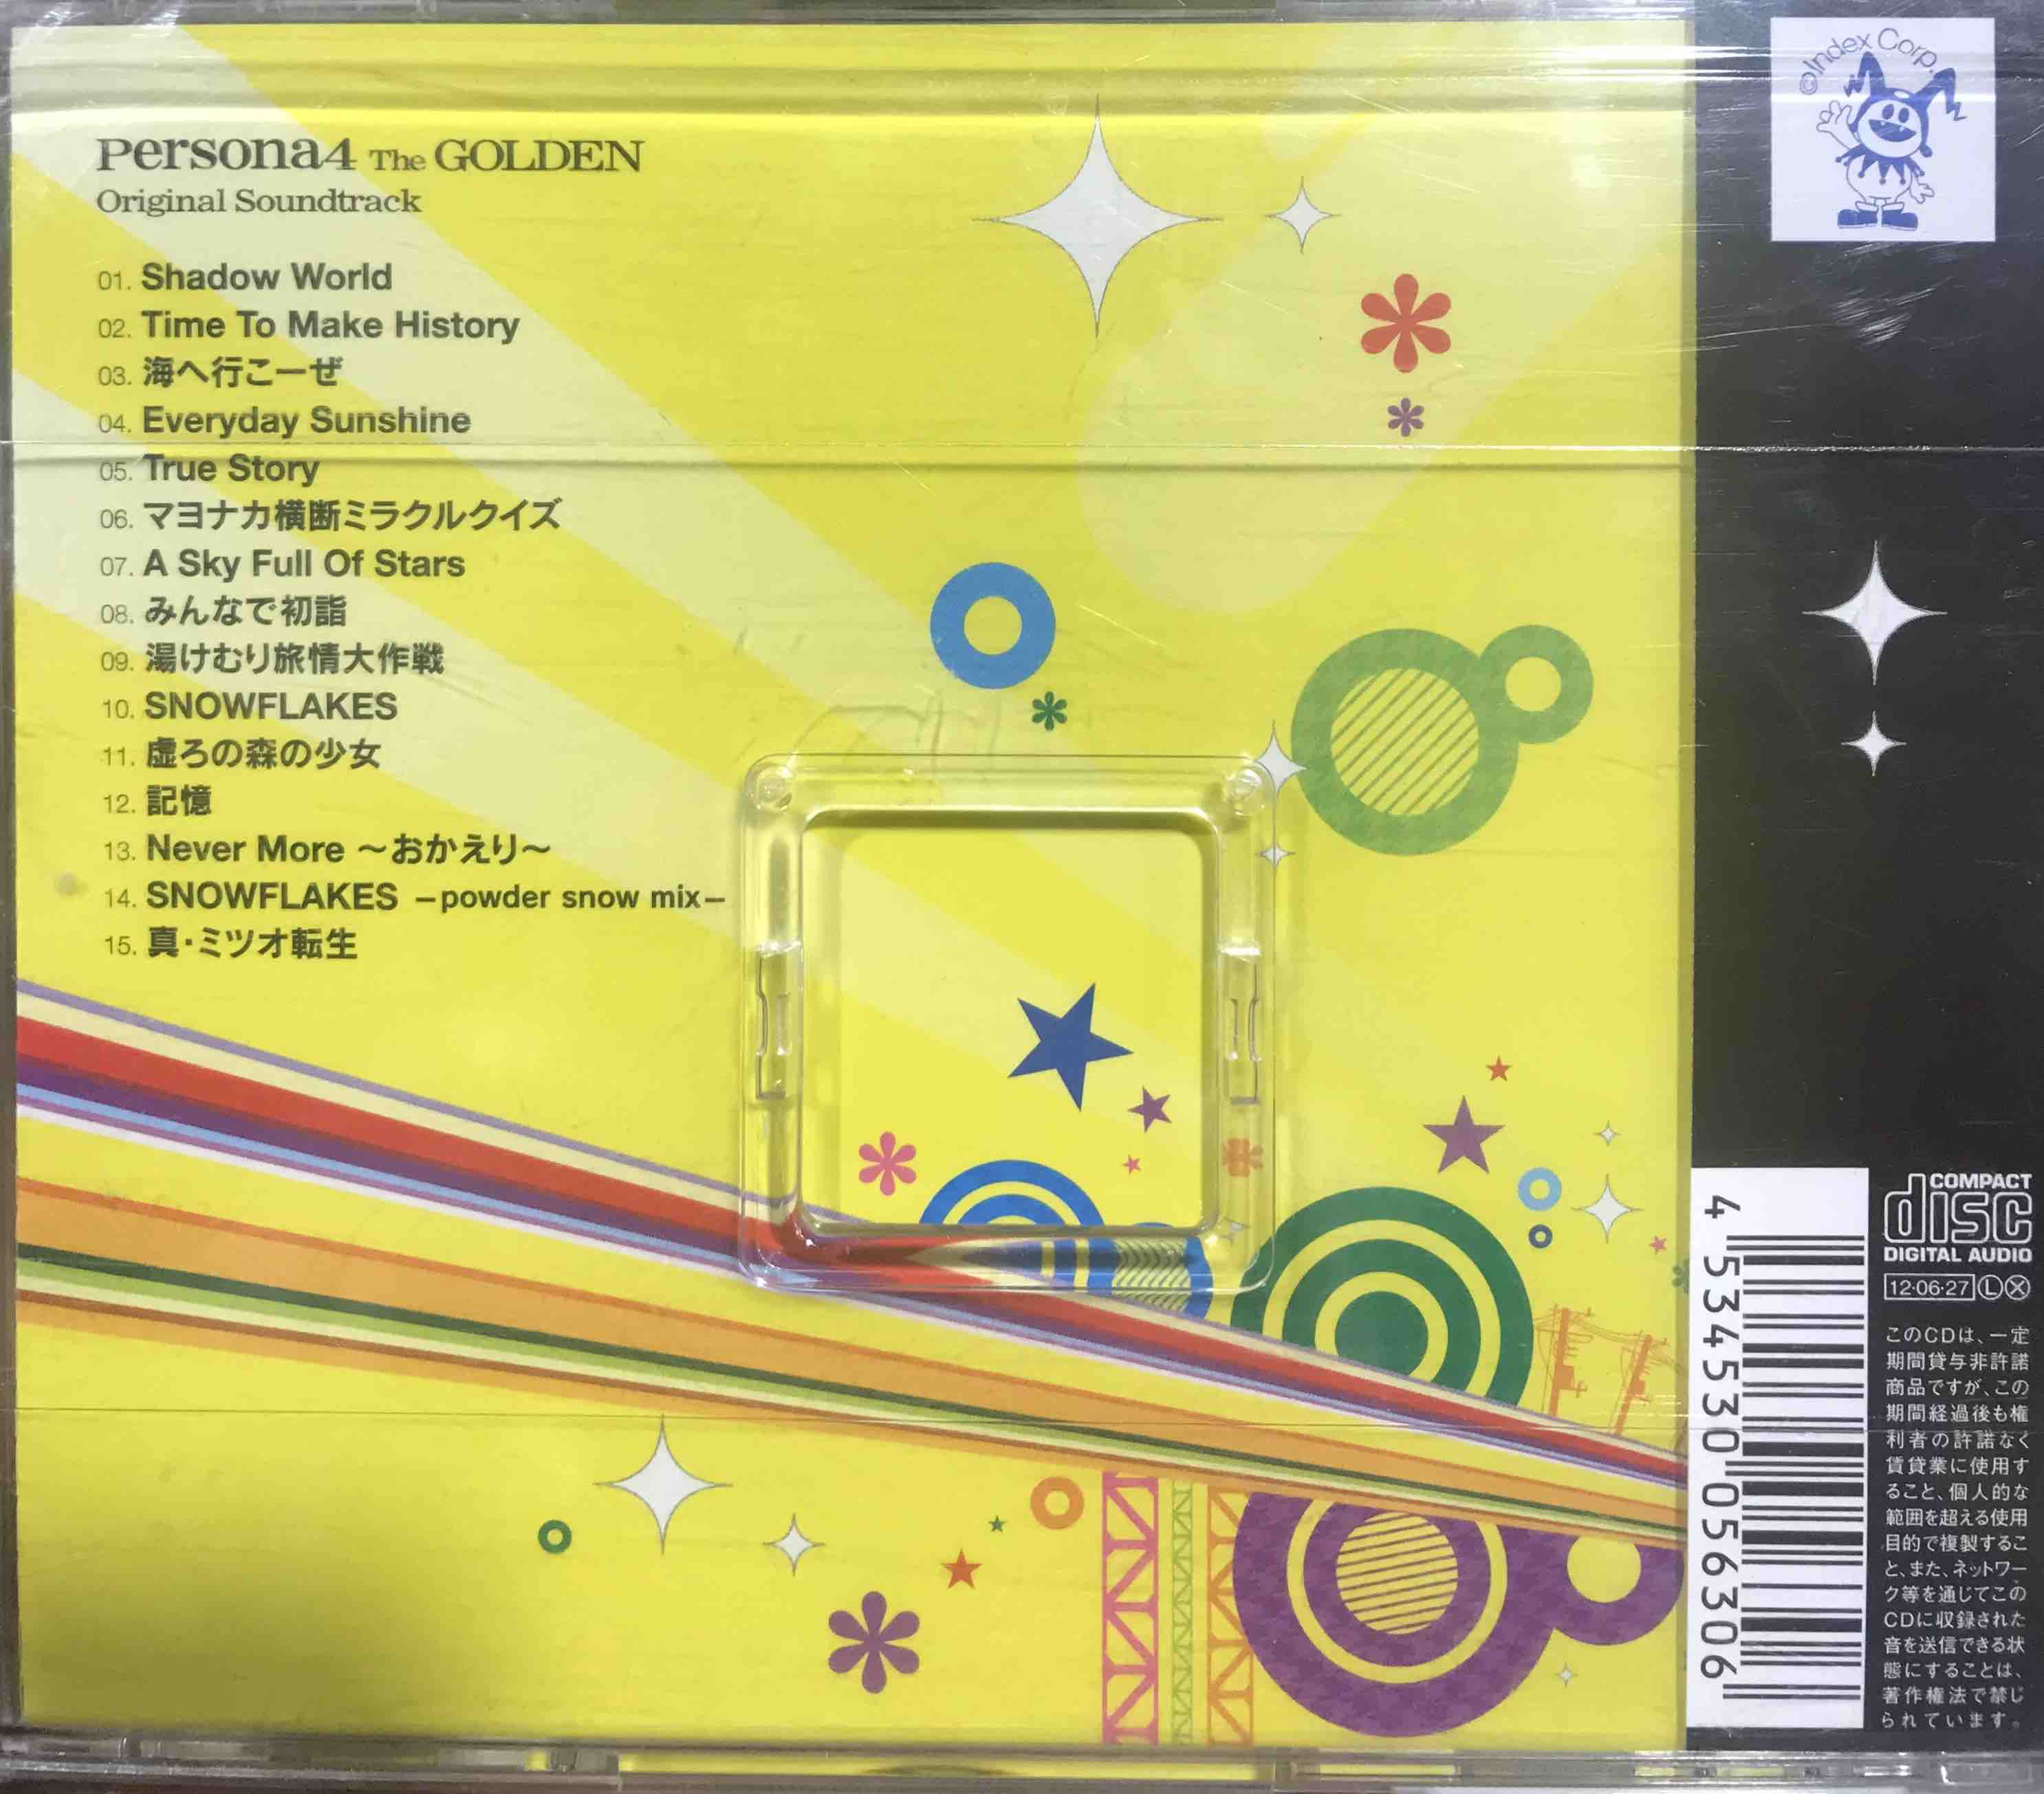 Shoji Meguro ‎– Persona4 The GOLDEN - Original Soundtrack